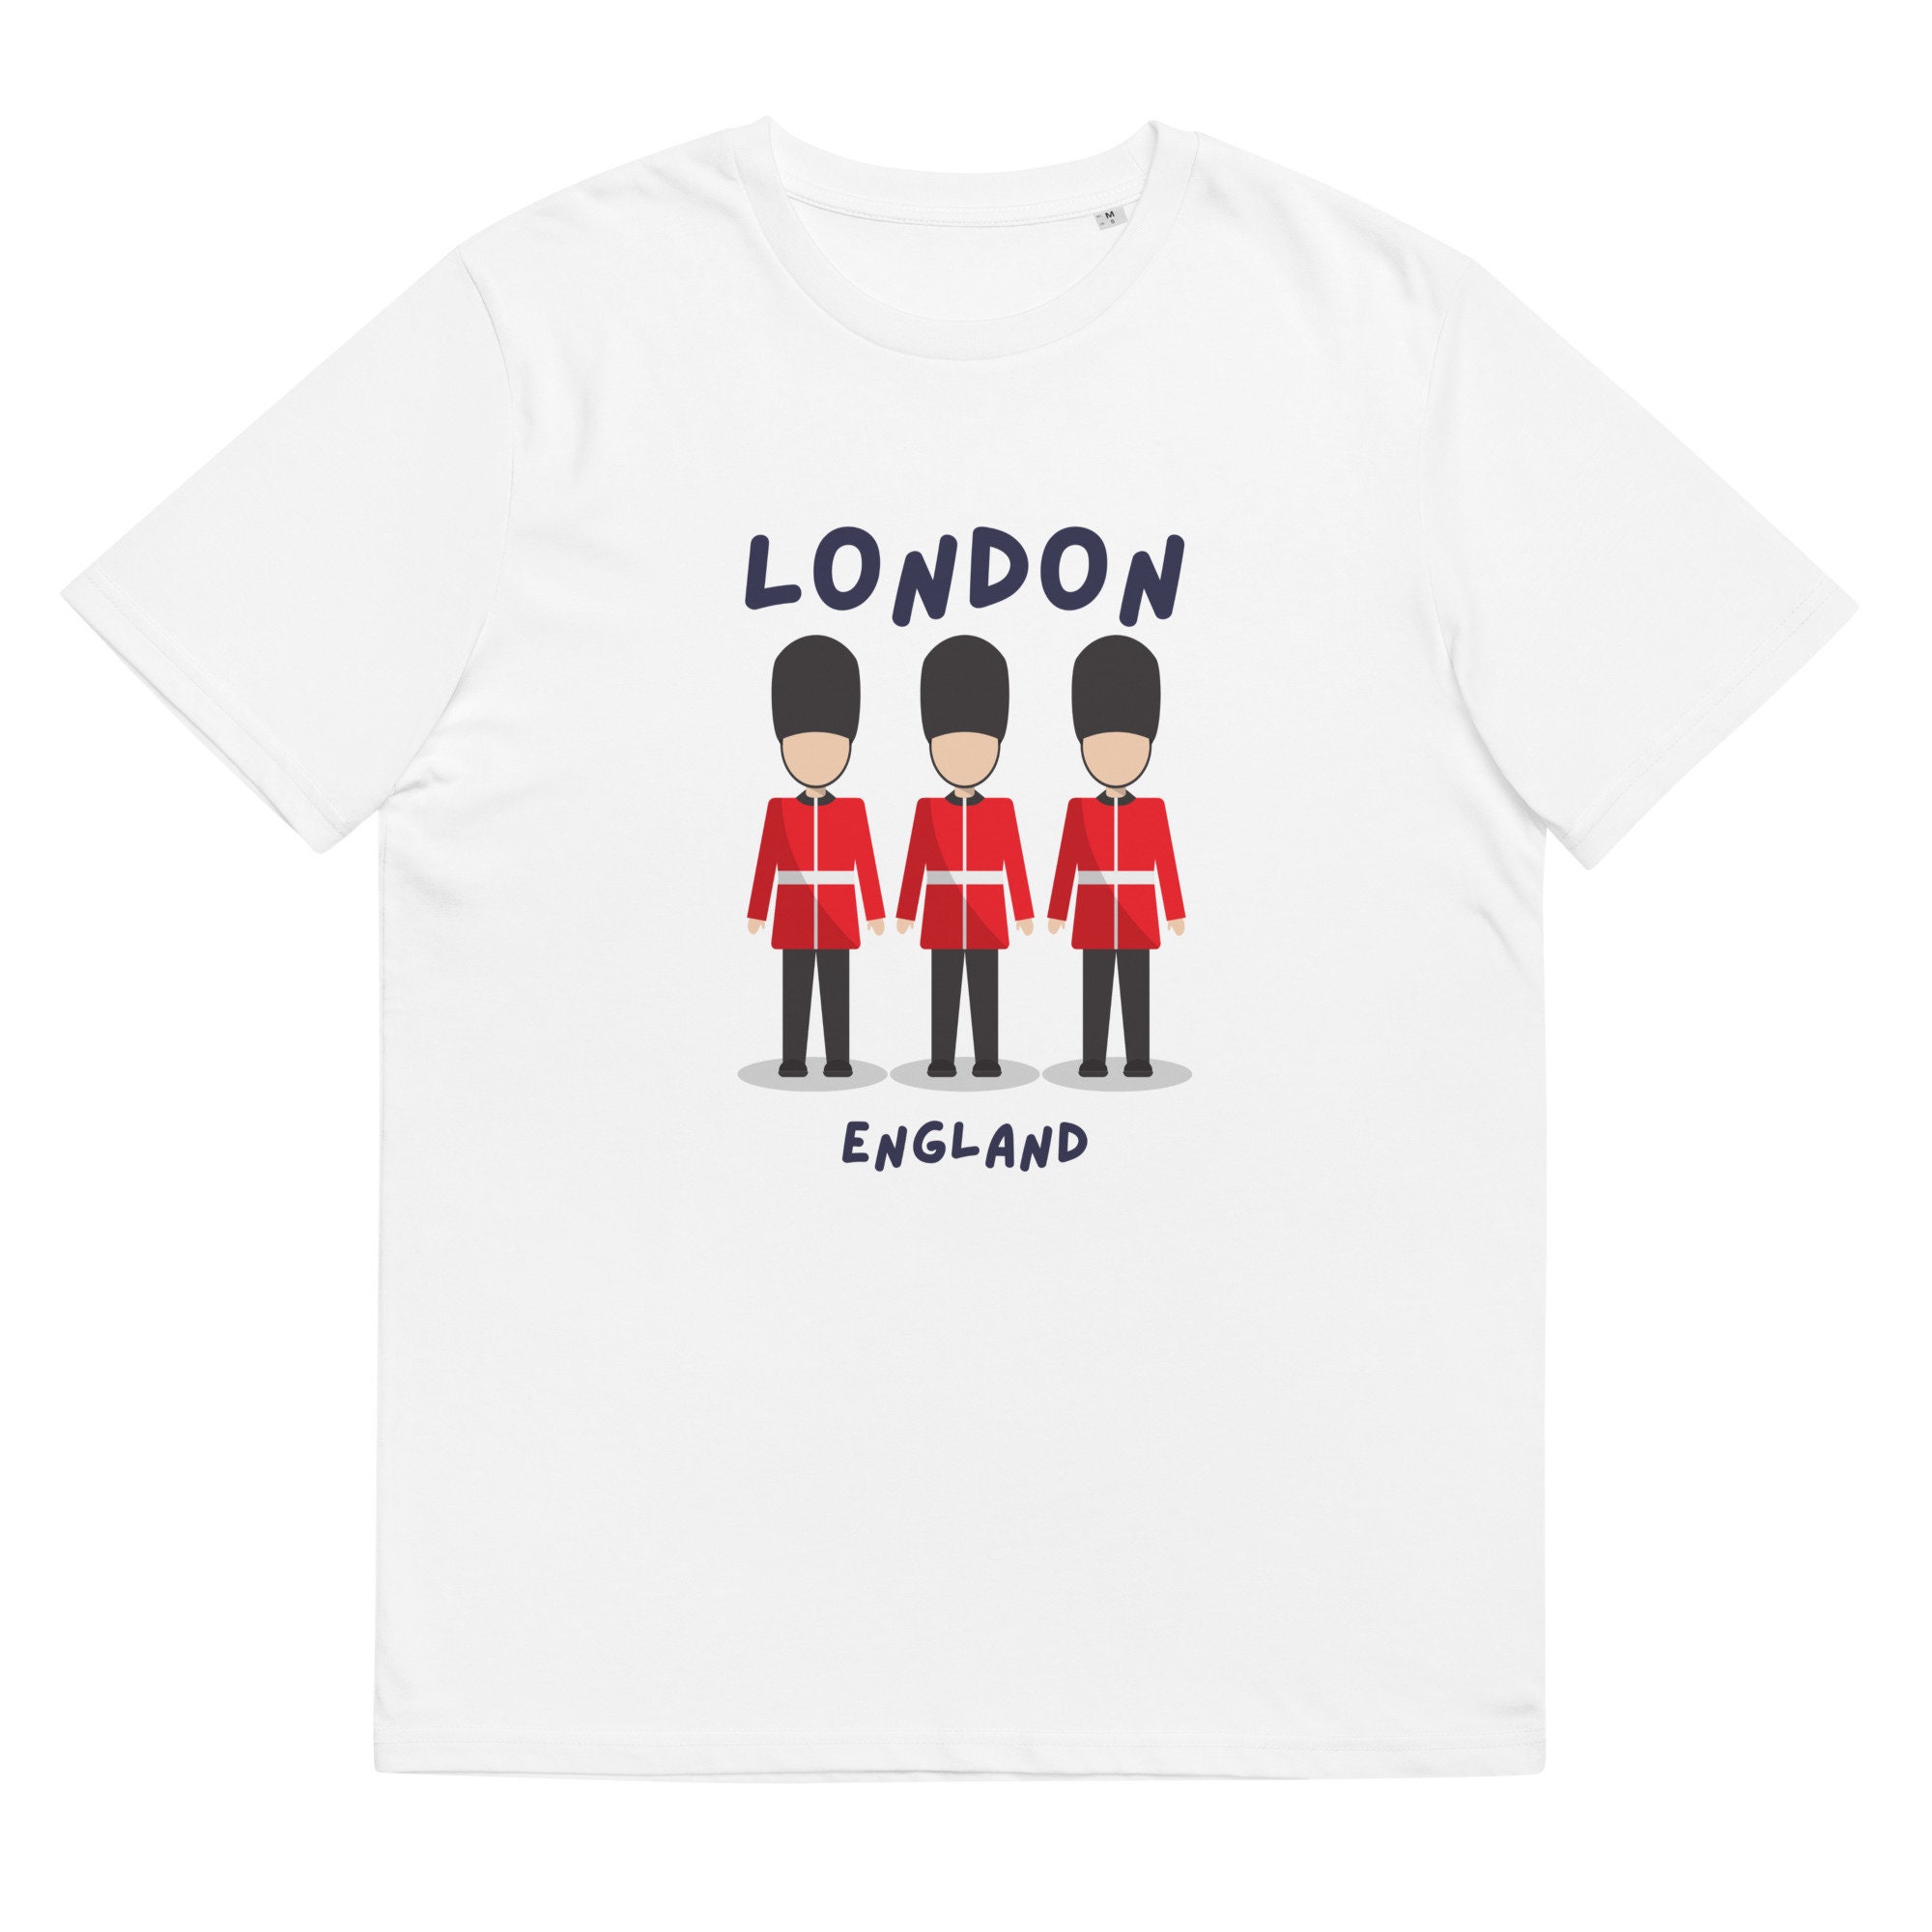 Discover London England - Royal Guard - Unisex organic cotton t-shirt